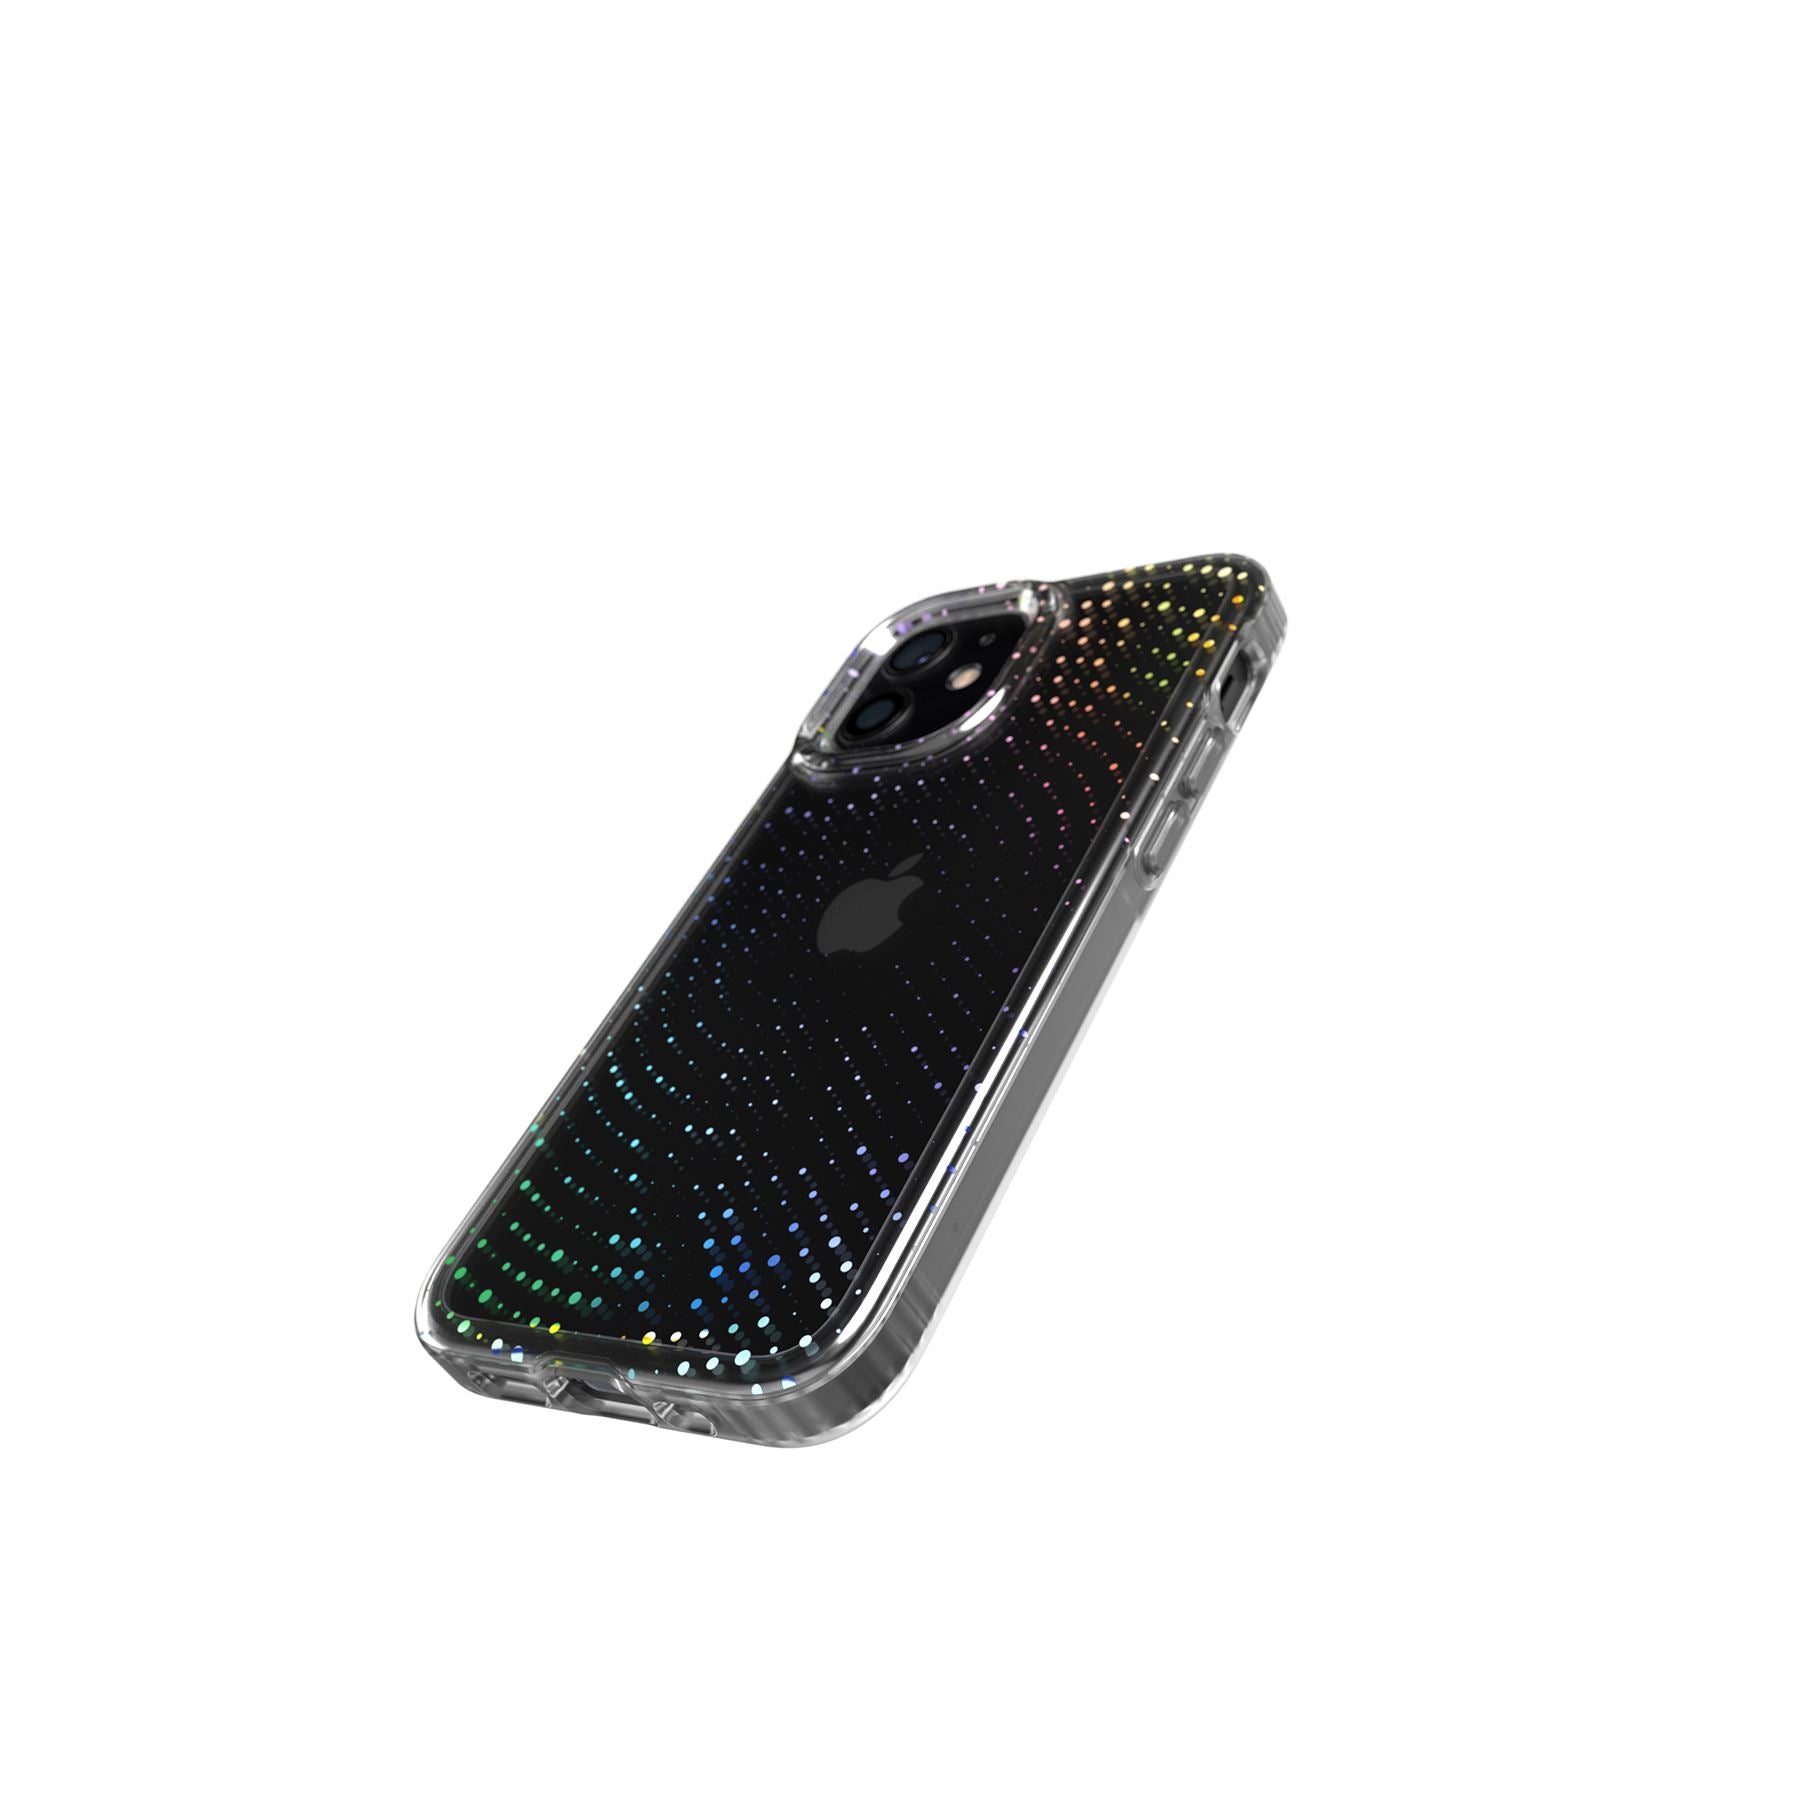 Evo Sparkle - Apple iPhone 12 mini Case - Radiant